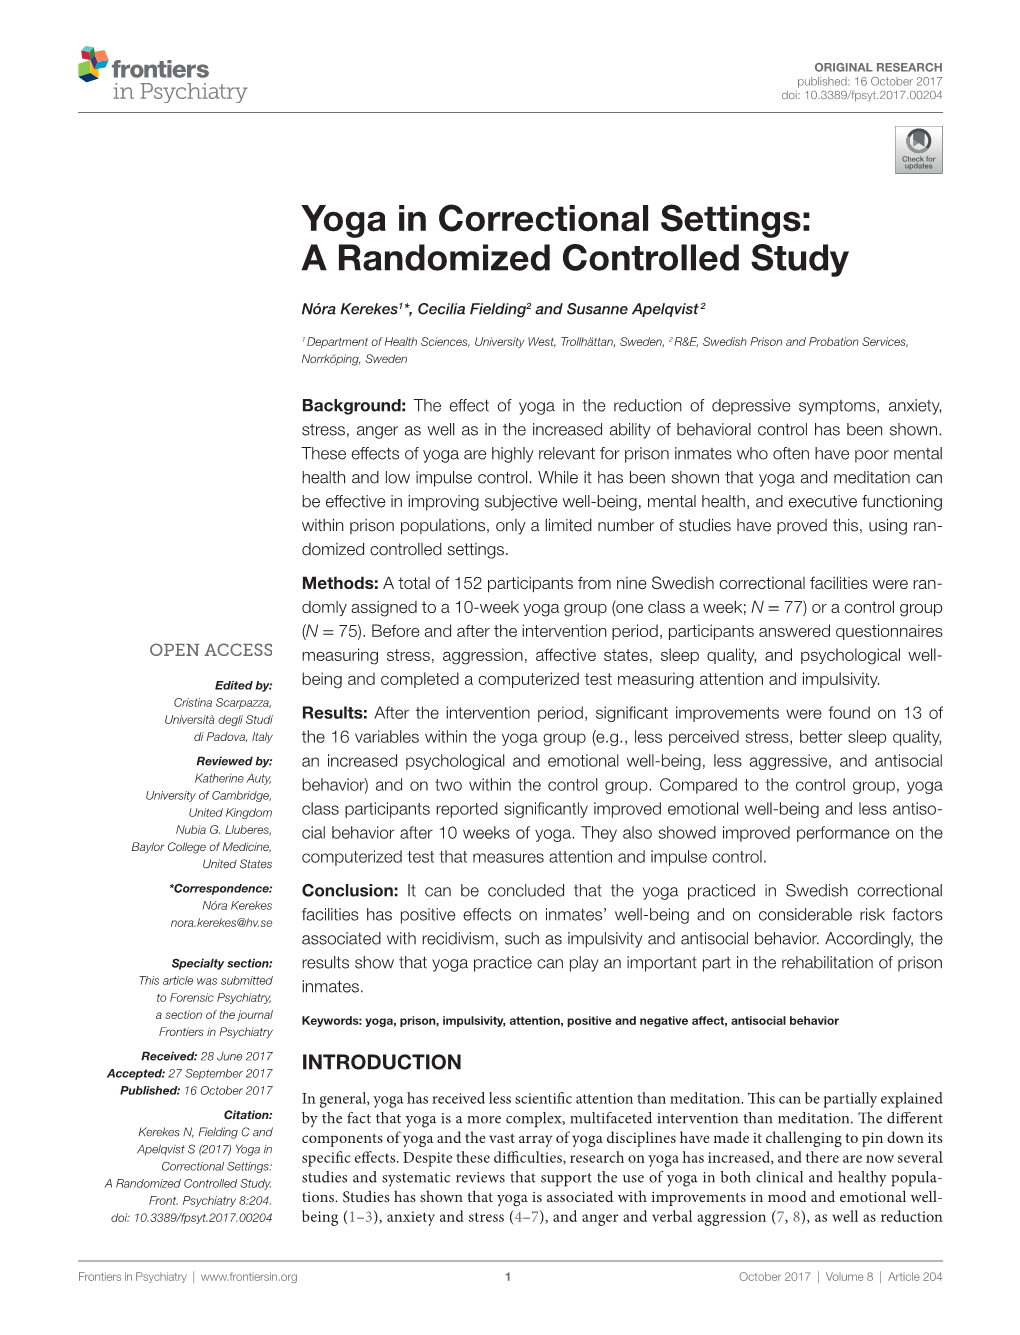 Yoga in Correctional Settings: a Randomized Controlled Study